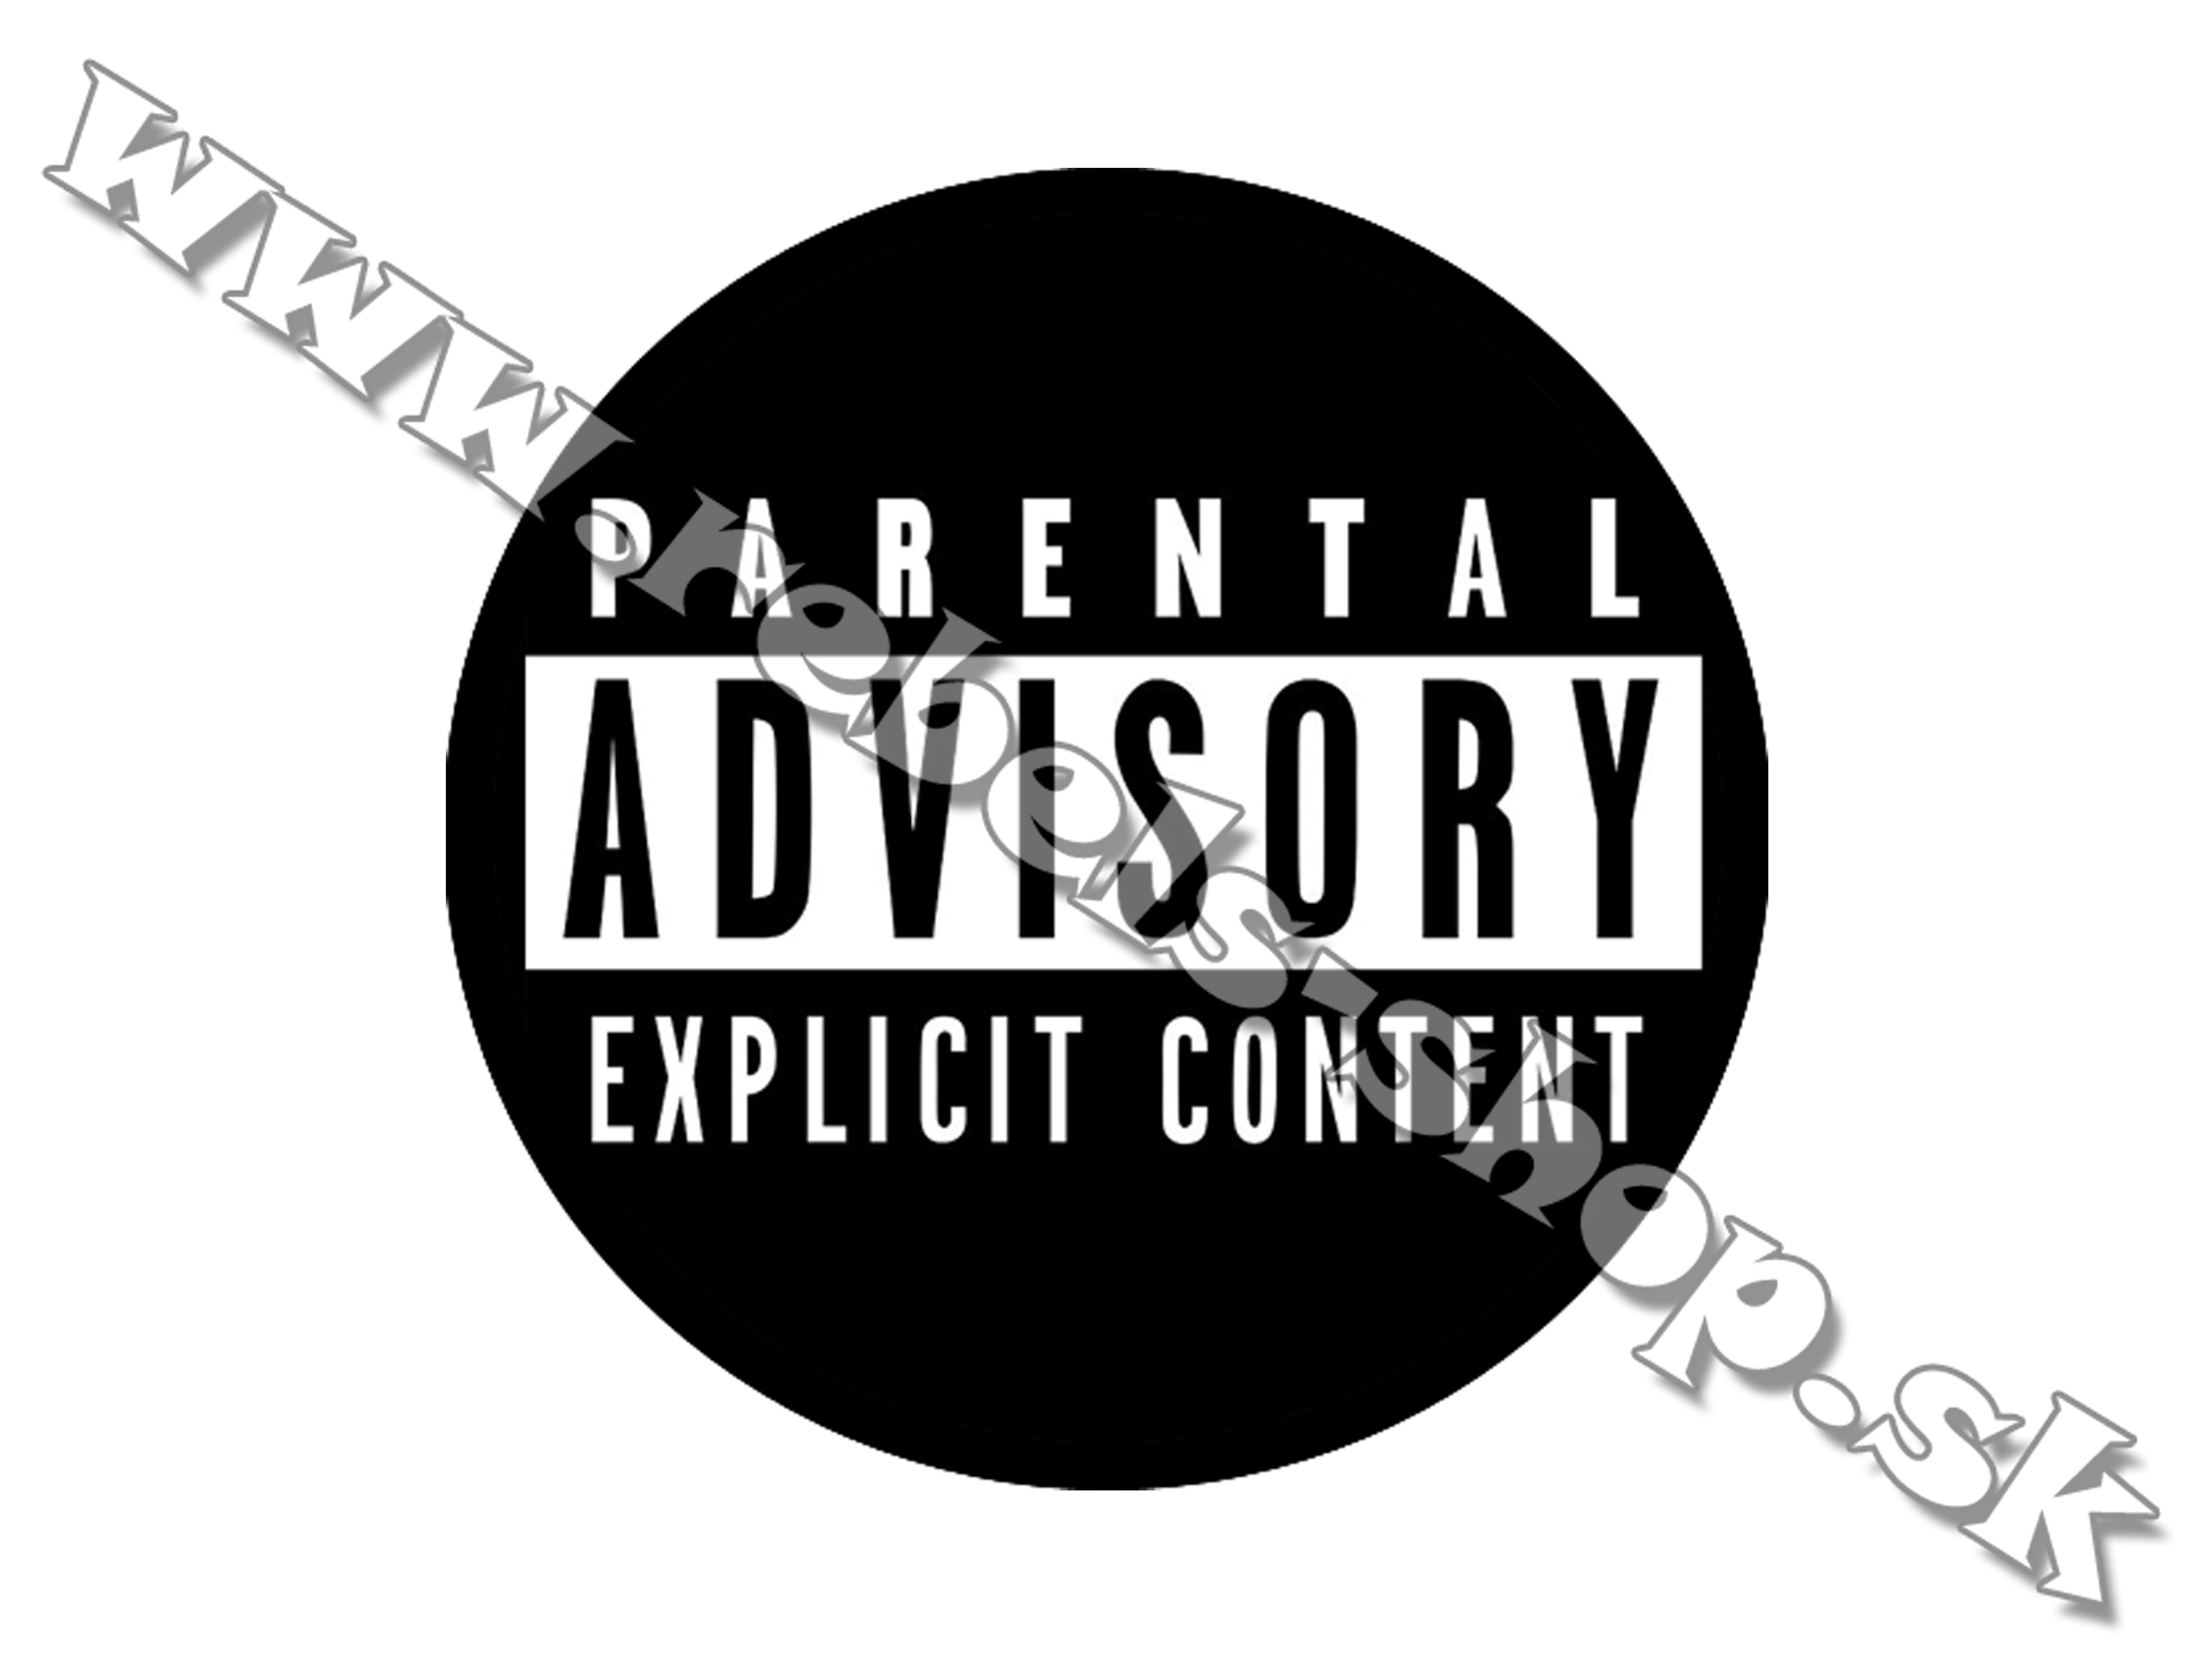 Odznak "Parental Advisory"